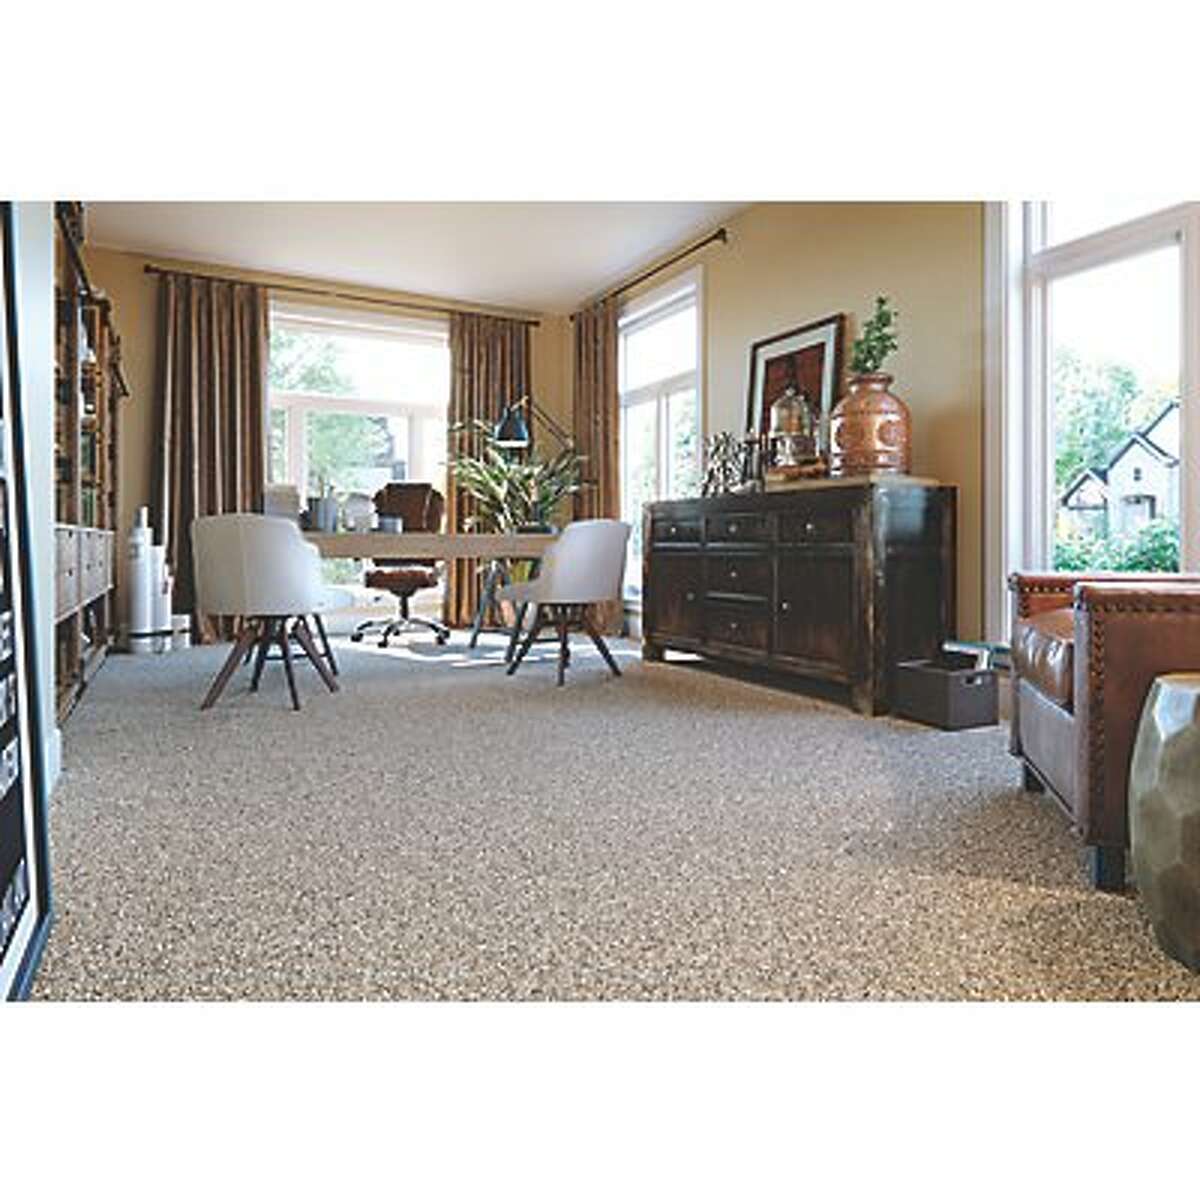 Everett Carpet Company https://www.everettcarpet.com/